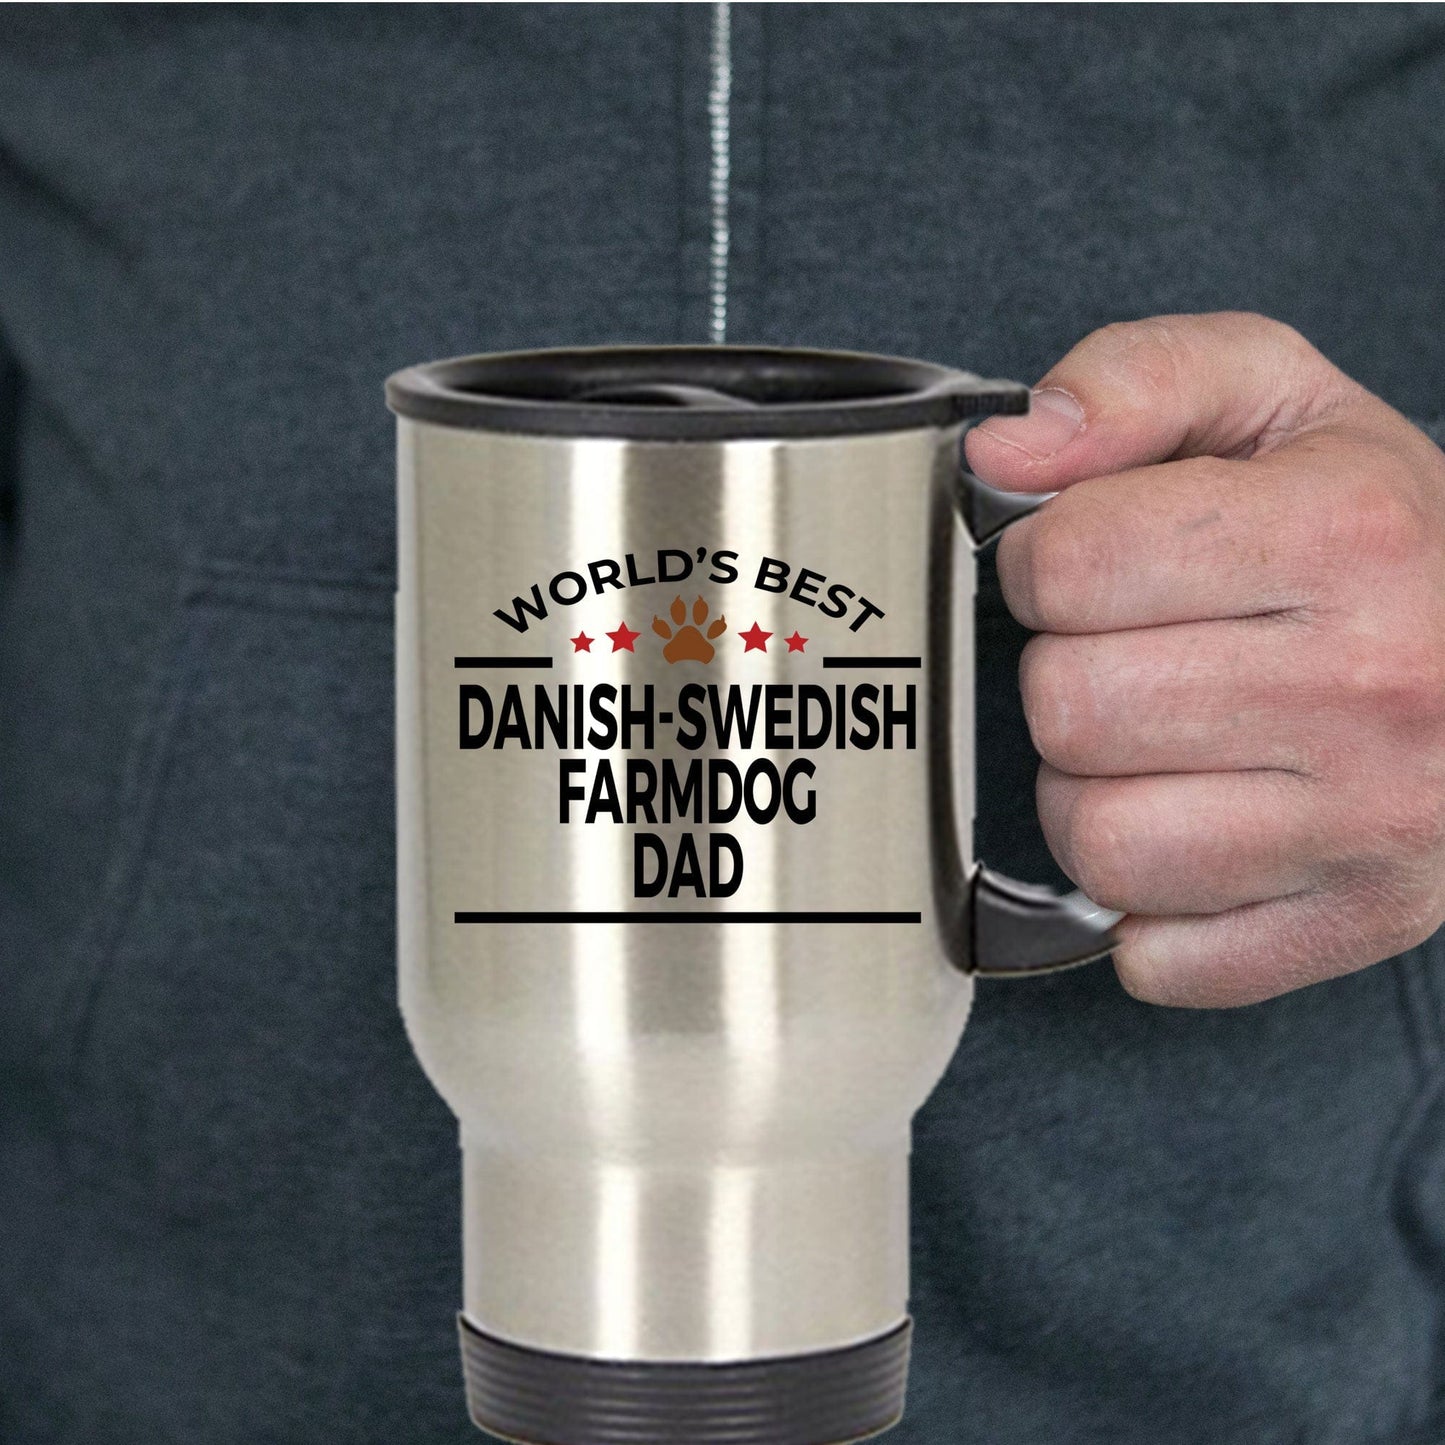 Danish-Swedish Farmdog Dad Travel Coffee Mug